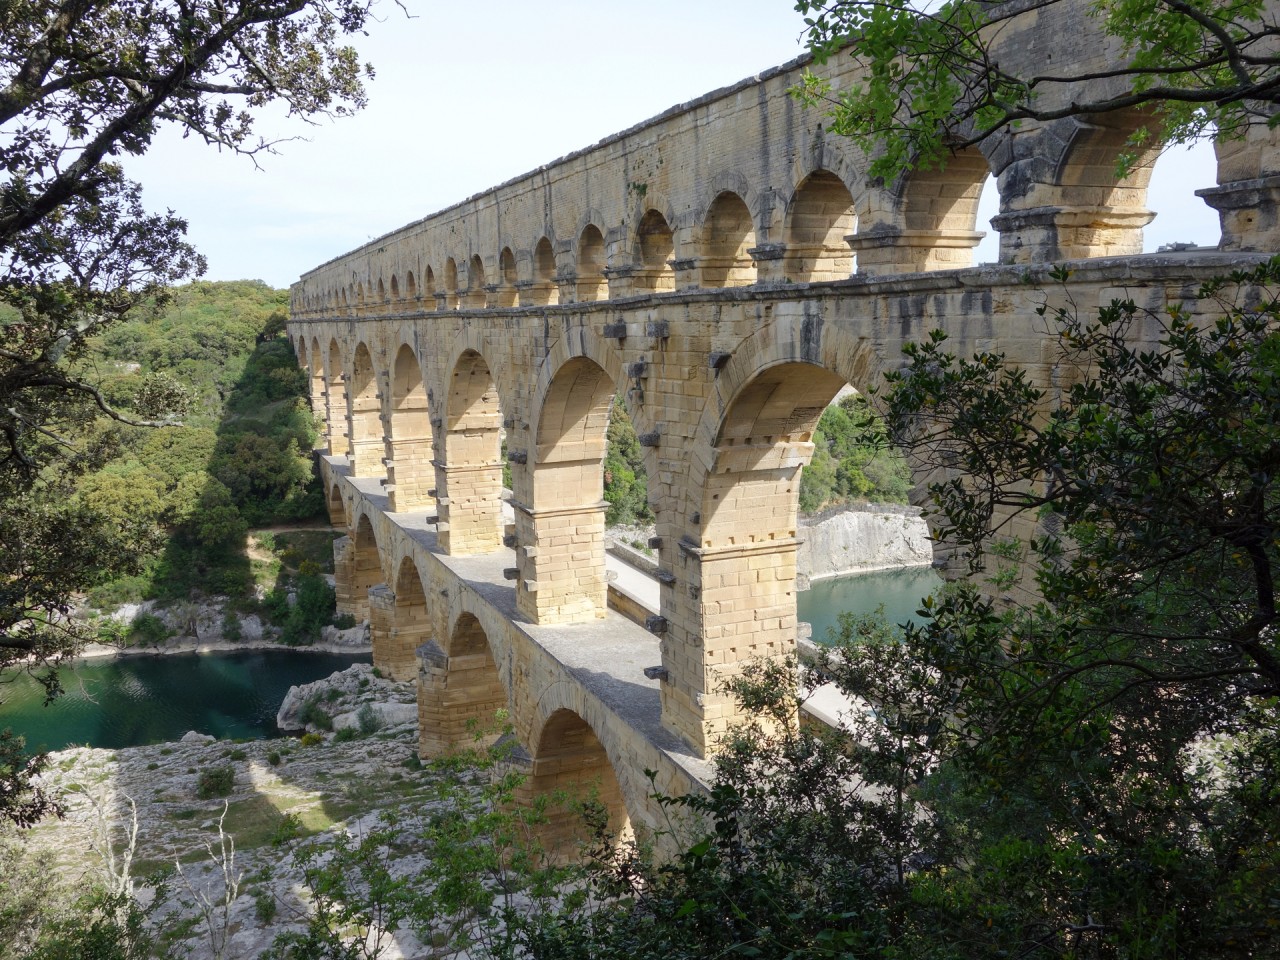 Pont du Gard, Near Avignon, France без смс